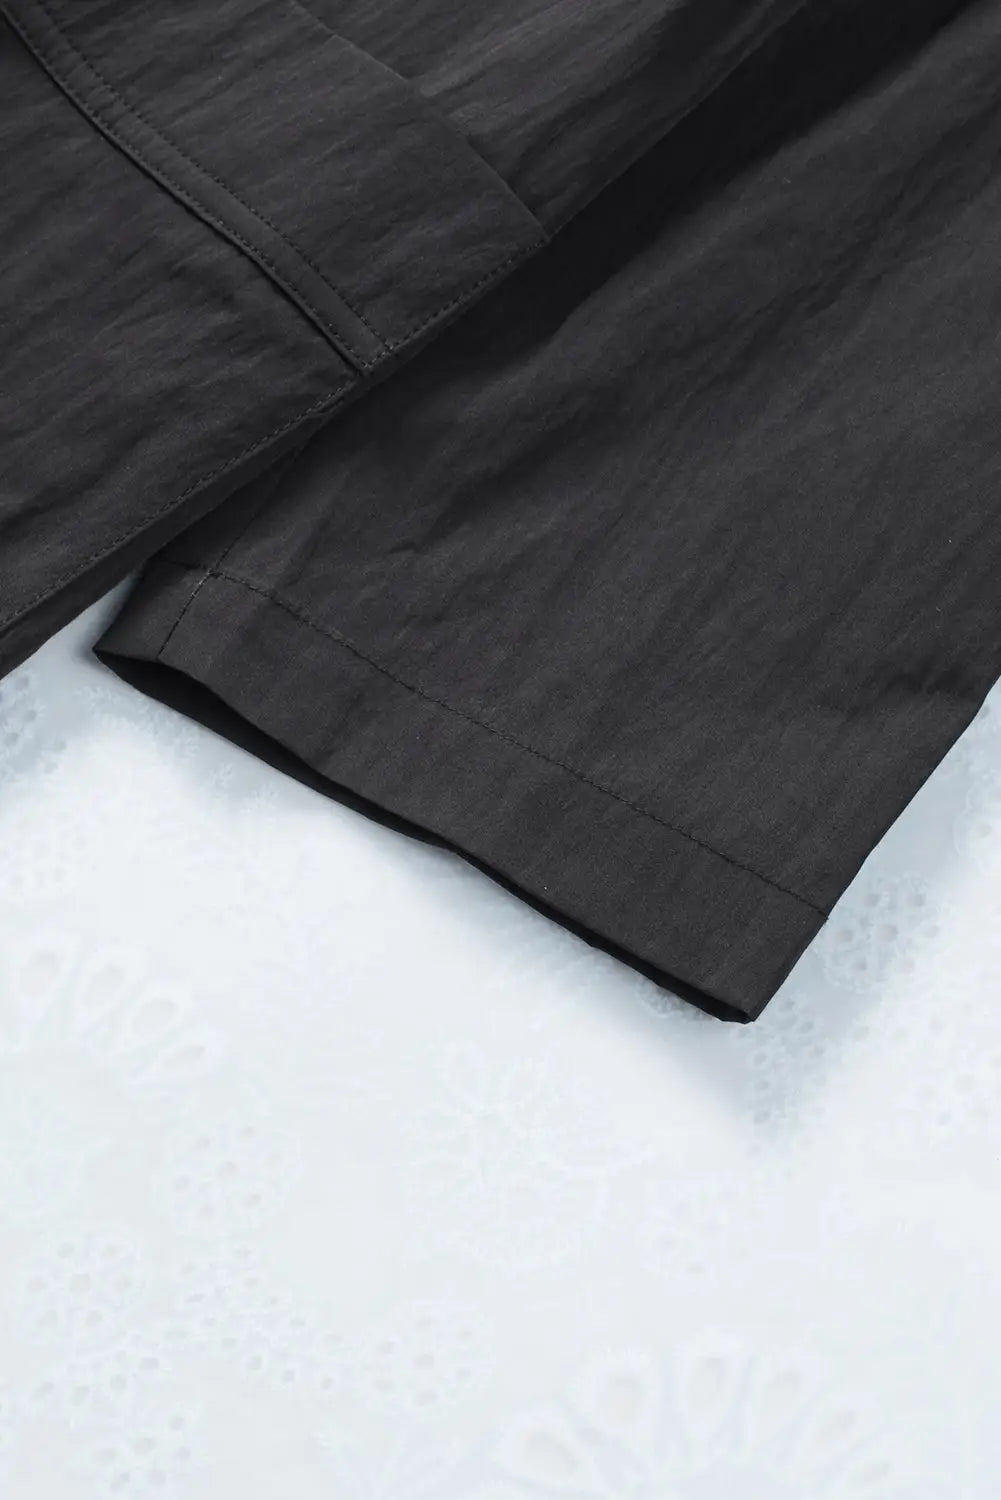 Black drawstring turndown collar hooded outerwear